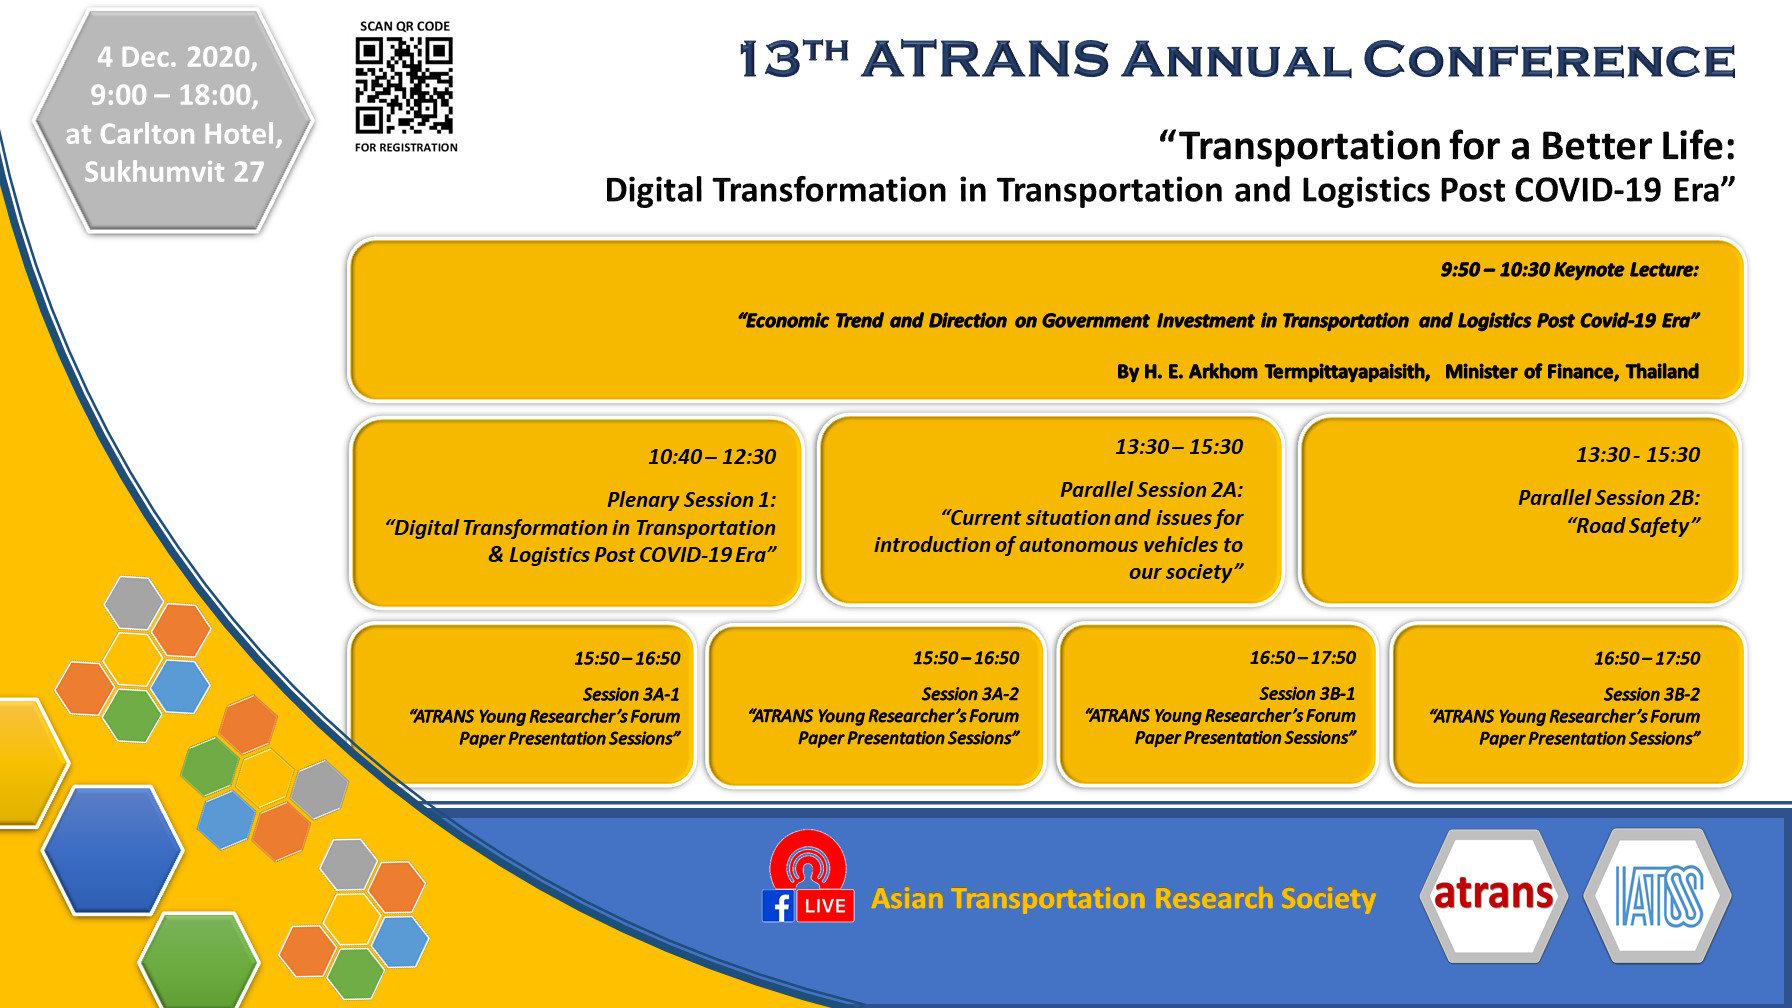 ATRANS : Asian Transportation Research Society